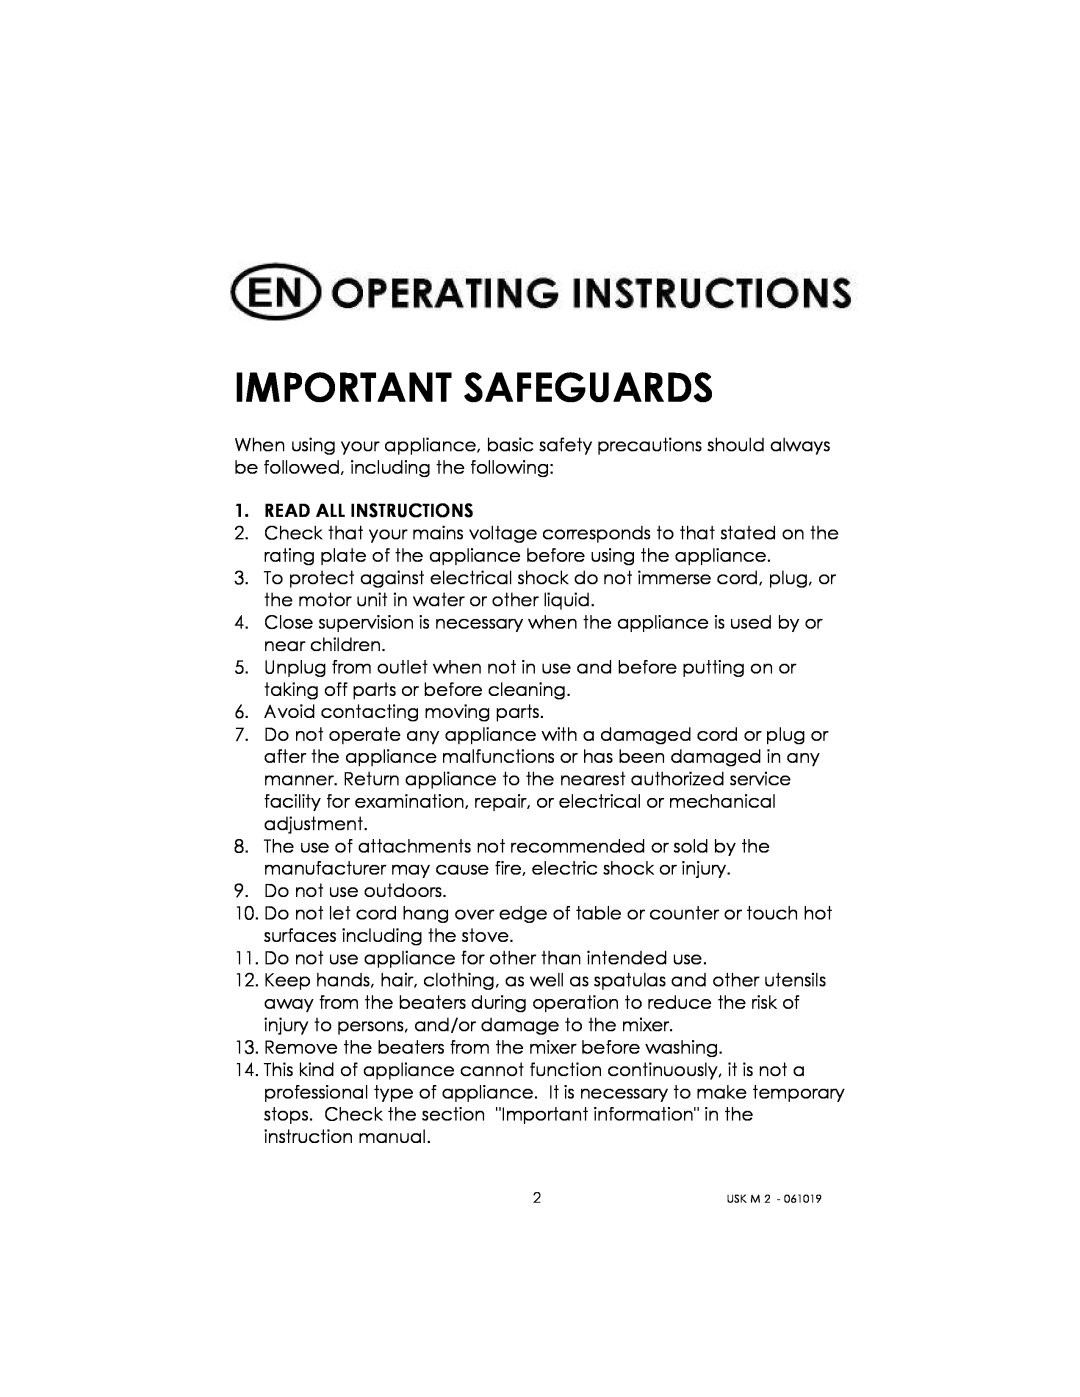 Kalorik USK M 2 manual Important Safeguards 